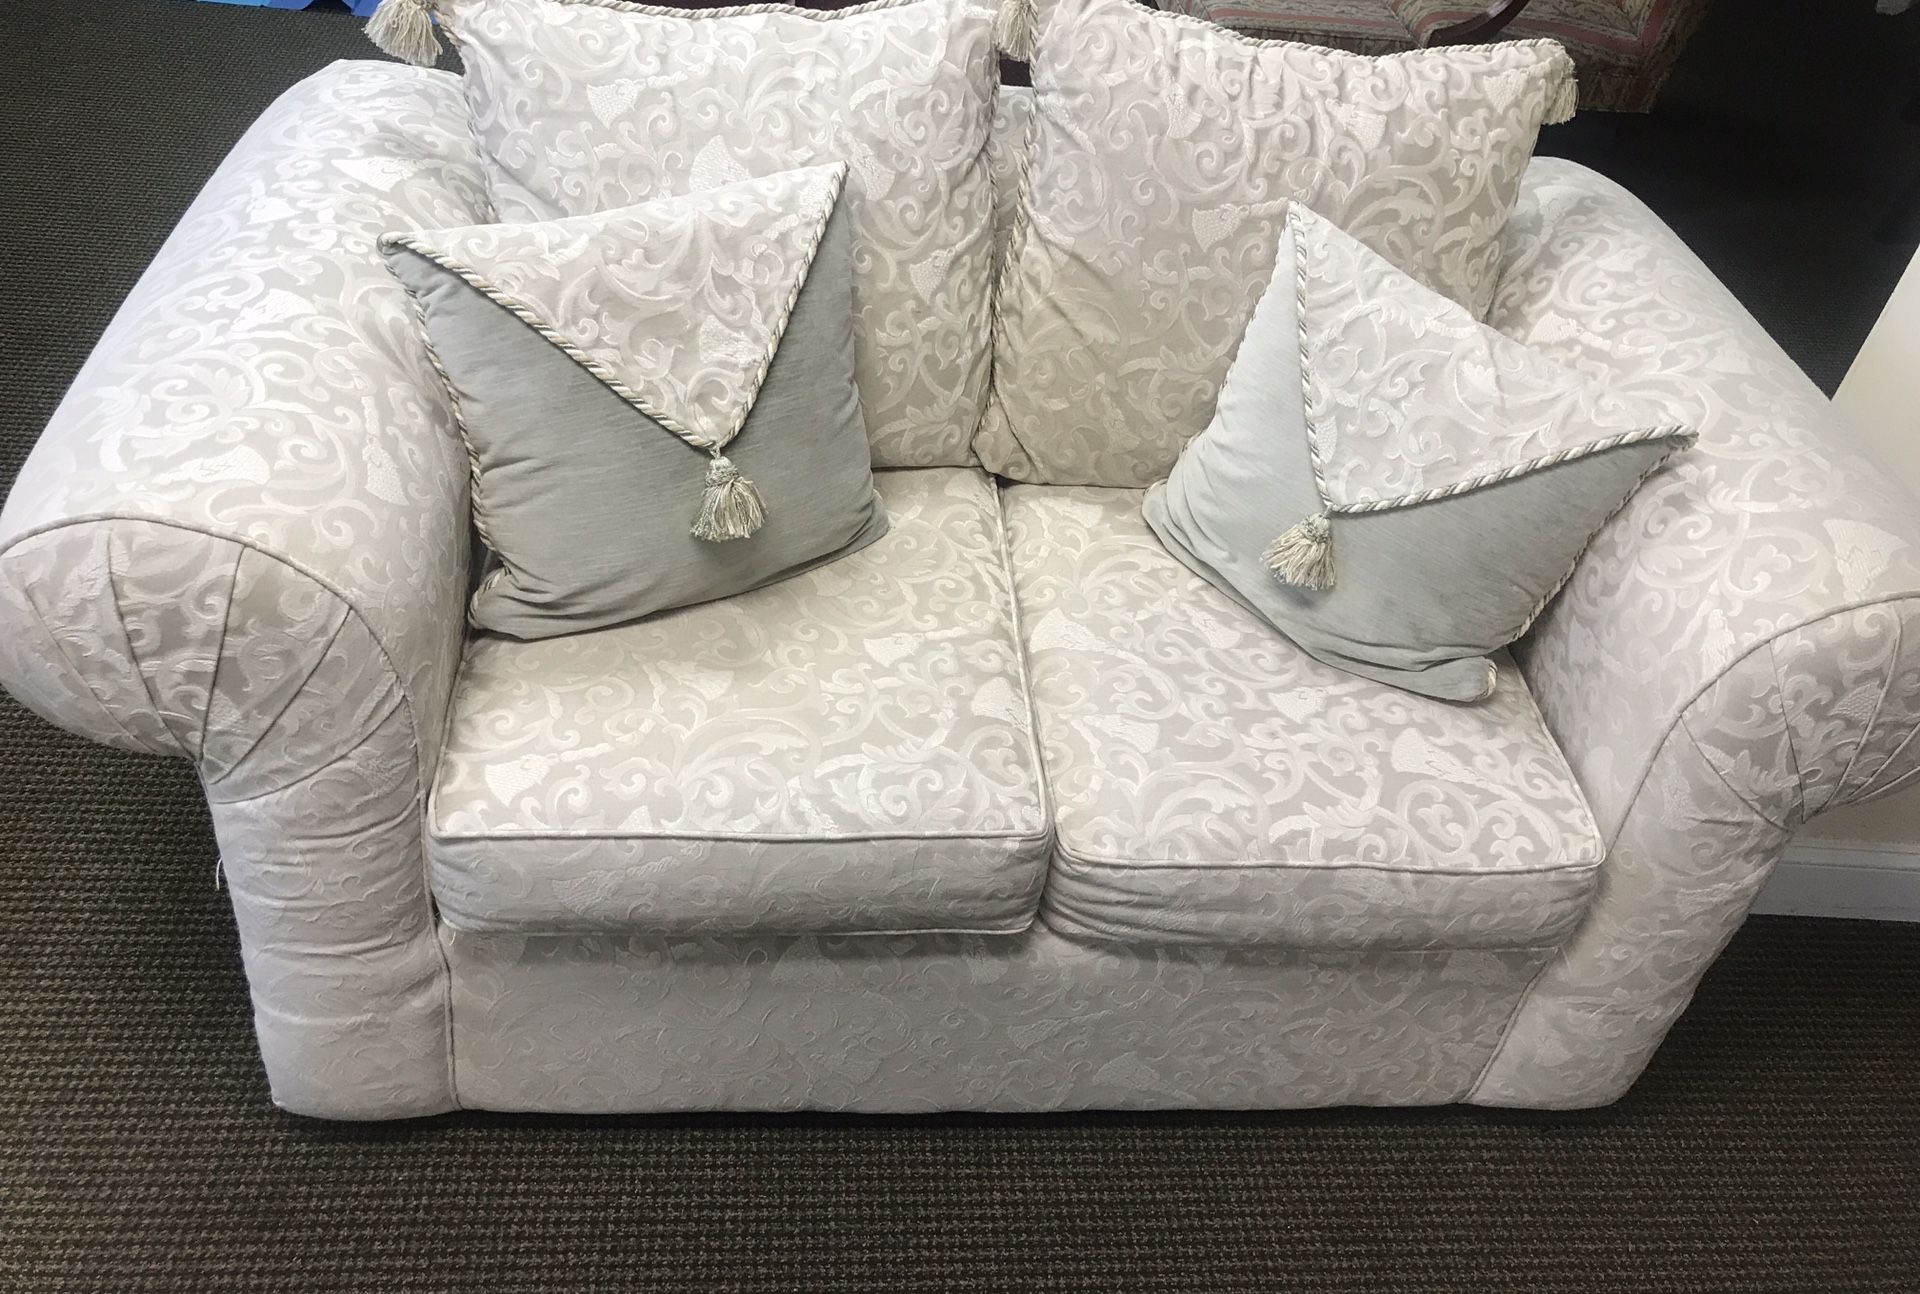 Thomasville 3 piece sofa set in brand new condition!!!